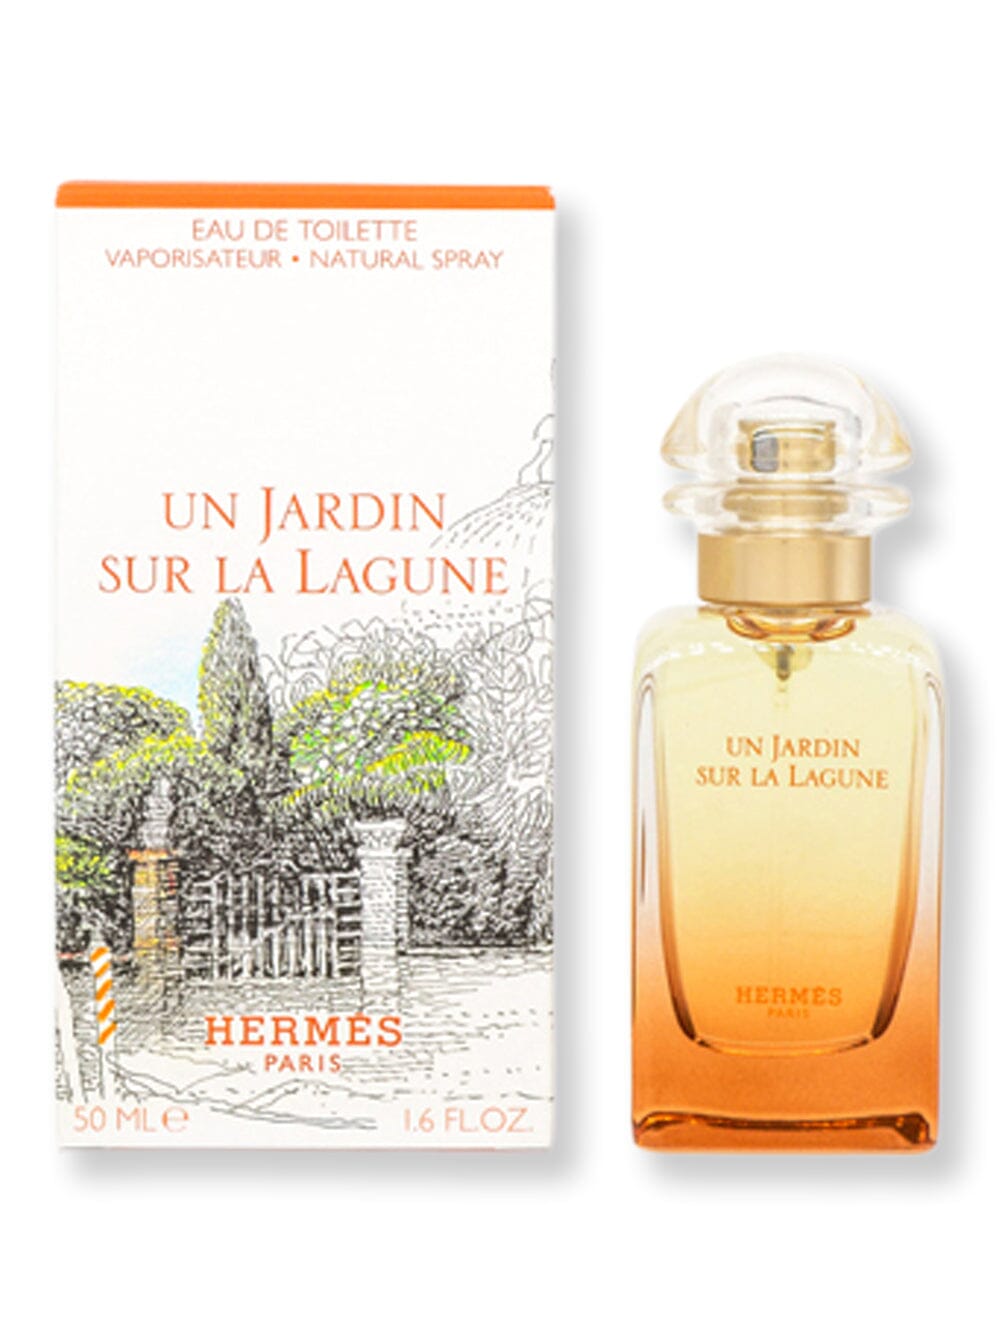 Hermes Hermes Un Jardin Sur La Lagune EDT Spray 1.7 oz50 ml Perfume 